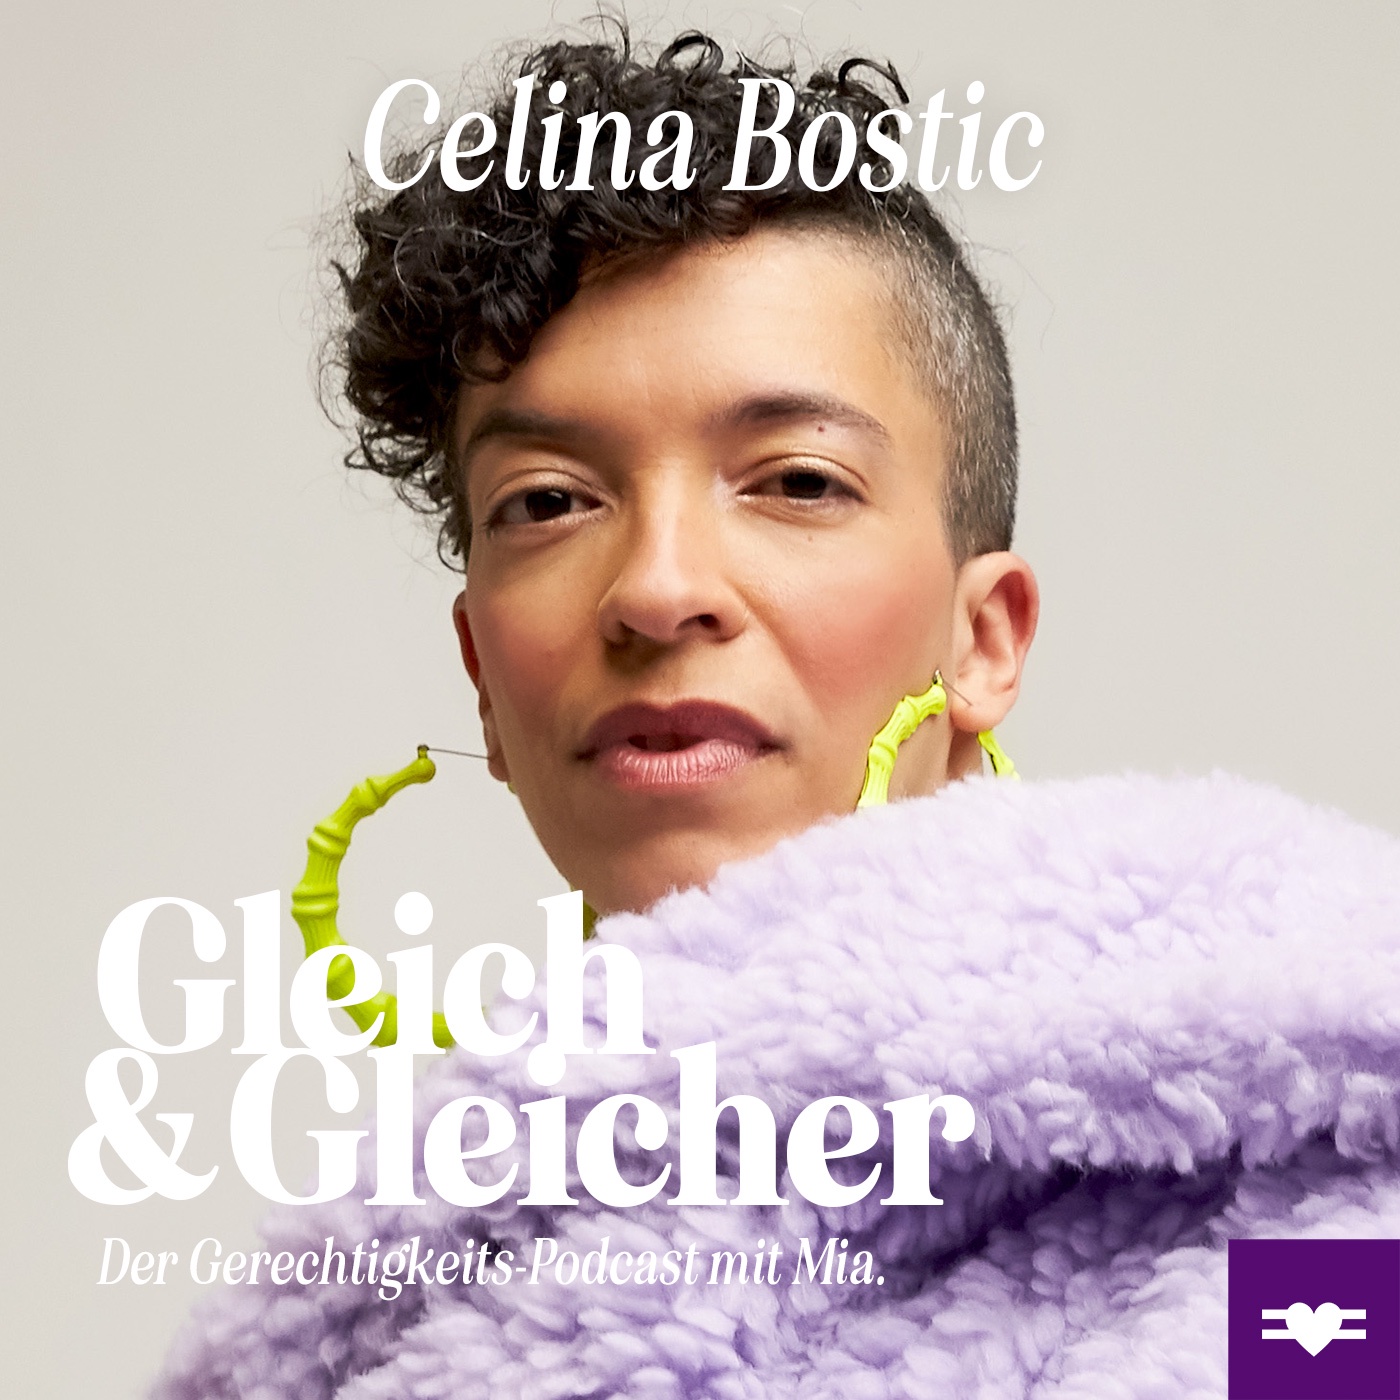 Celina Bostic über Selbstwirksamkeit & Empowerment